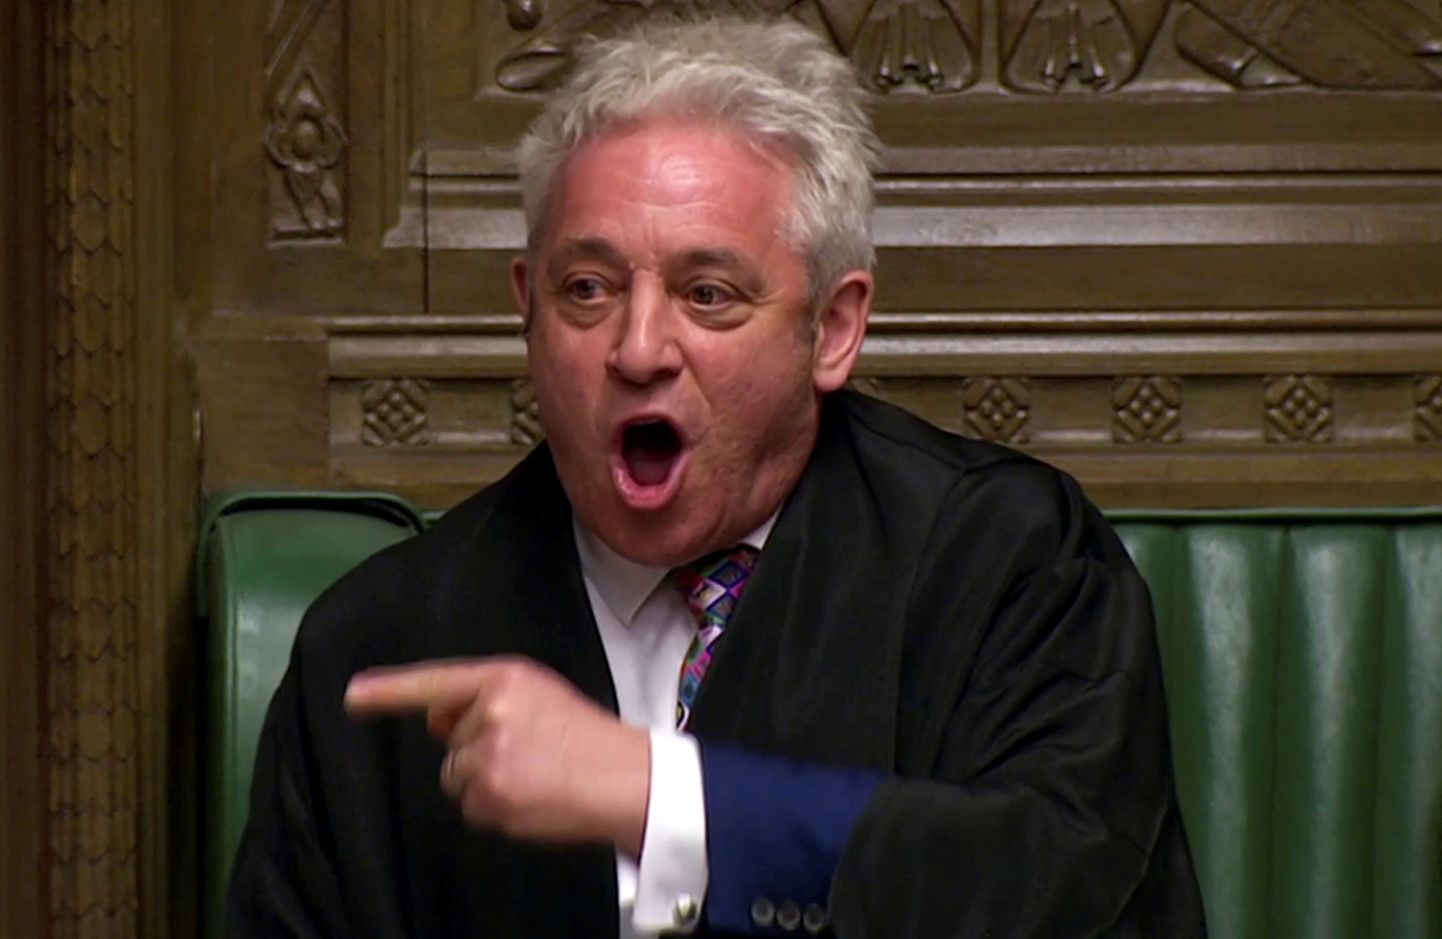 Briti parlamendi spiiker John Bercow tööpostil.